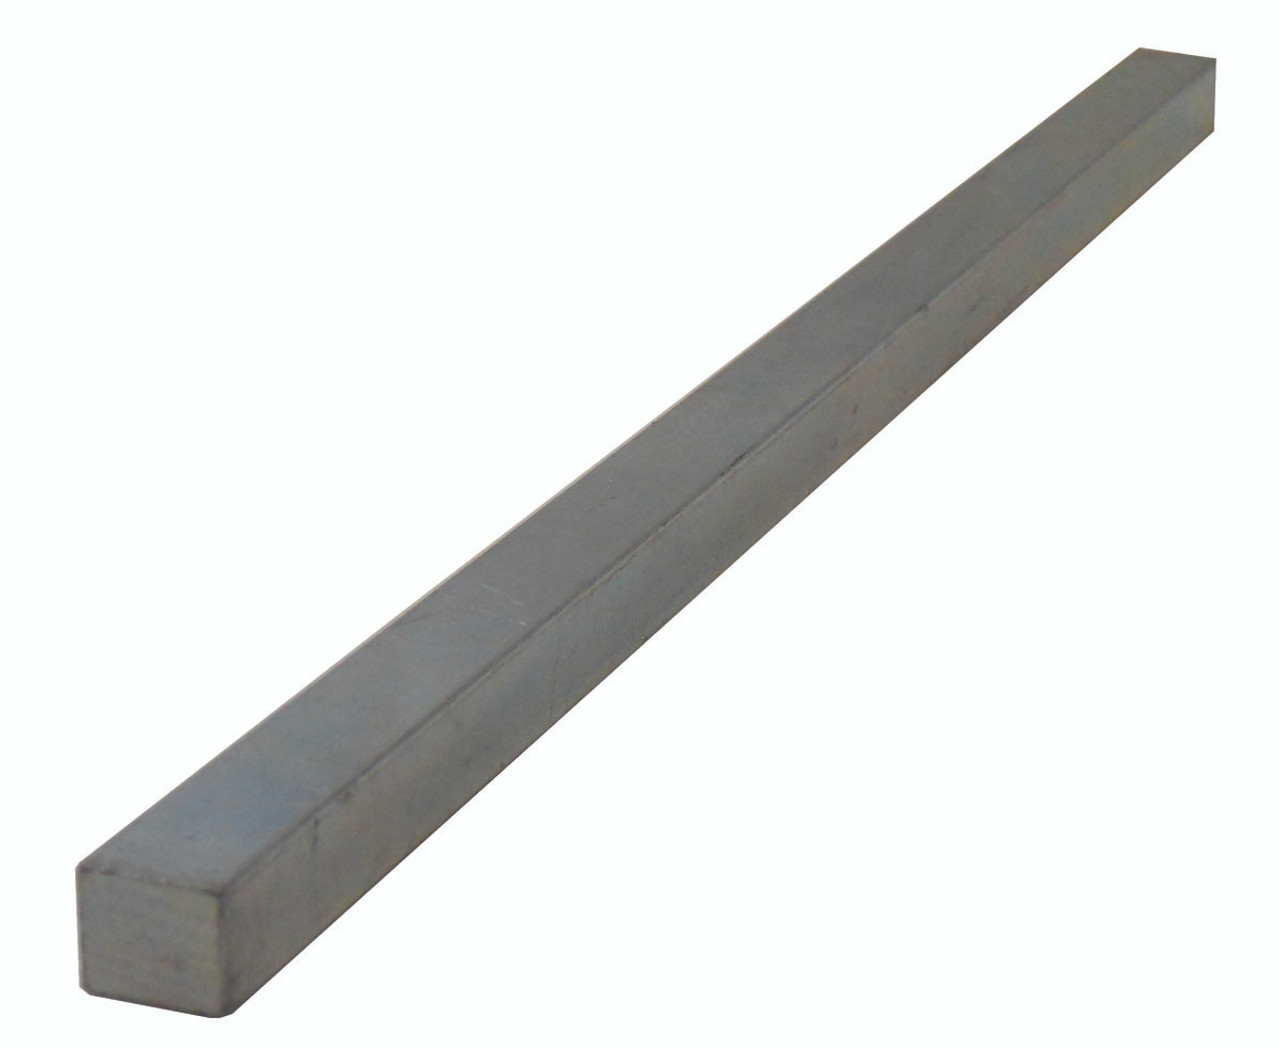 Rectangular SAE 7/8 x 1 x 36" Zinc Plated Steel Keystock  .875-1000-36